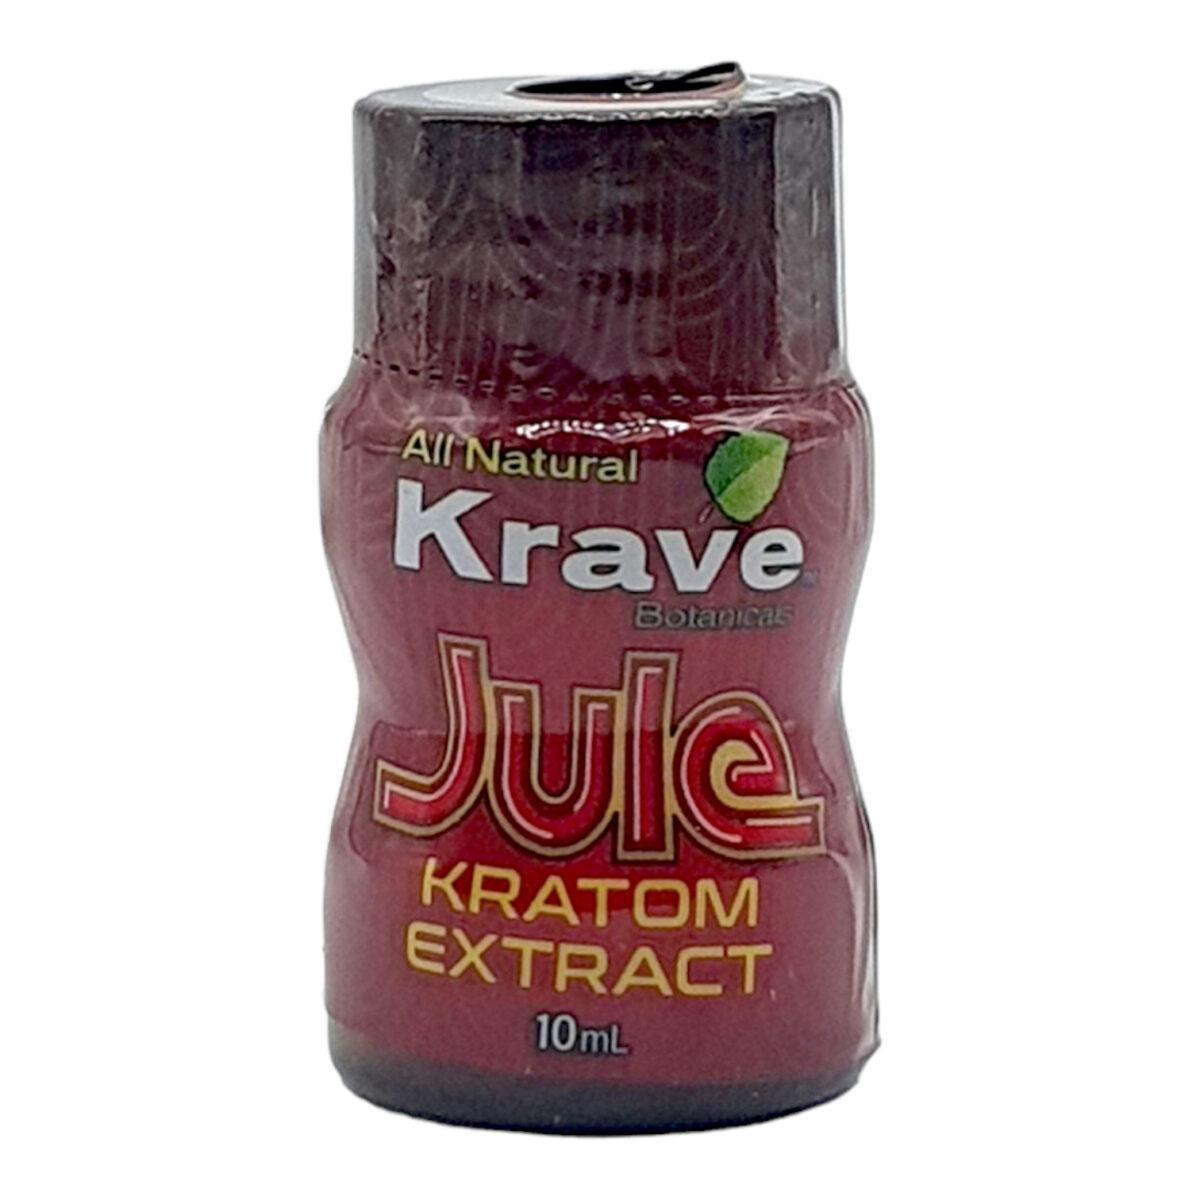 Krave Jule Kratom Extract Shot Original – 10ml